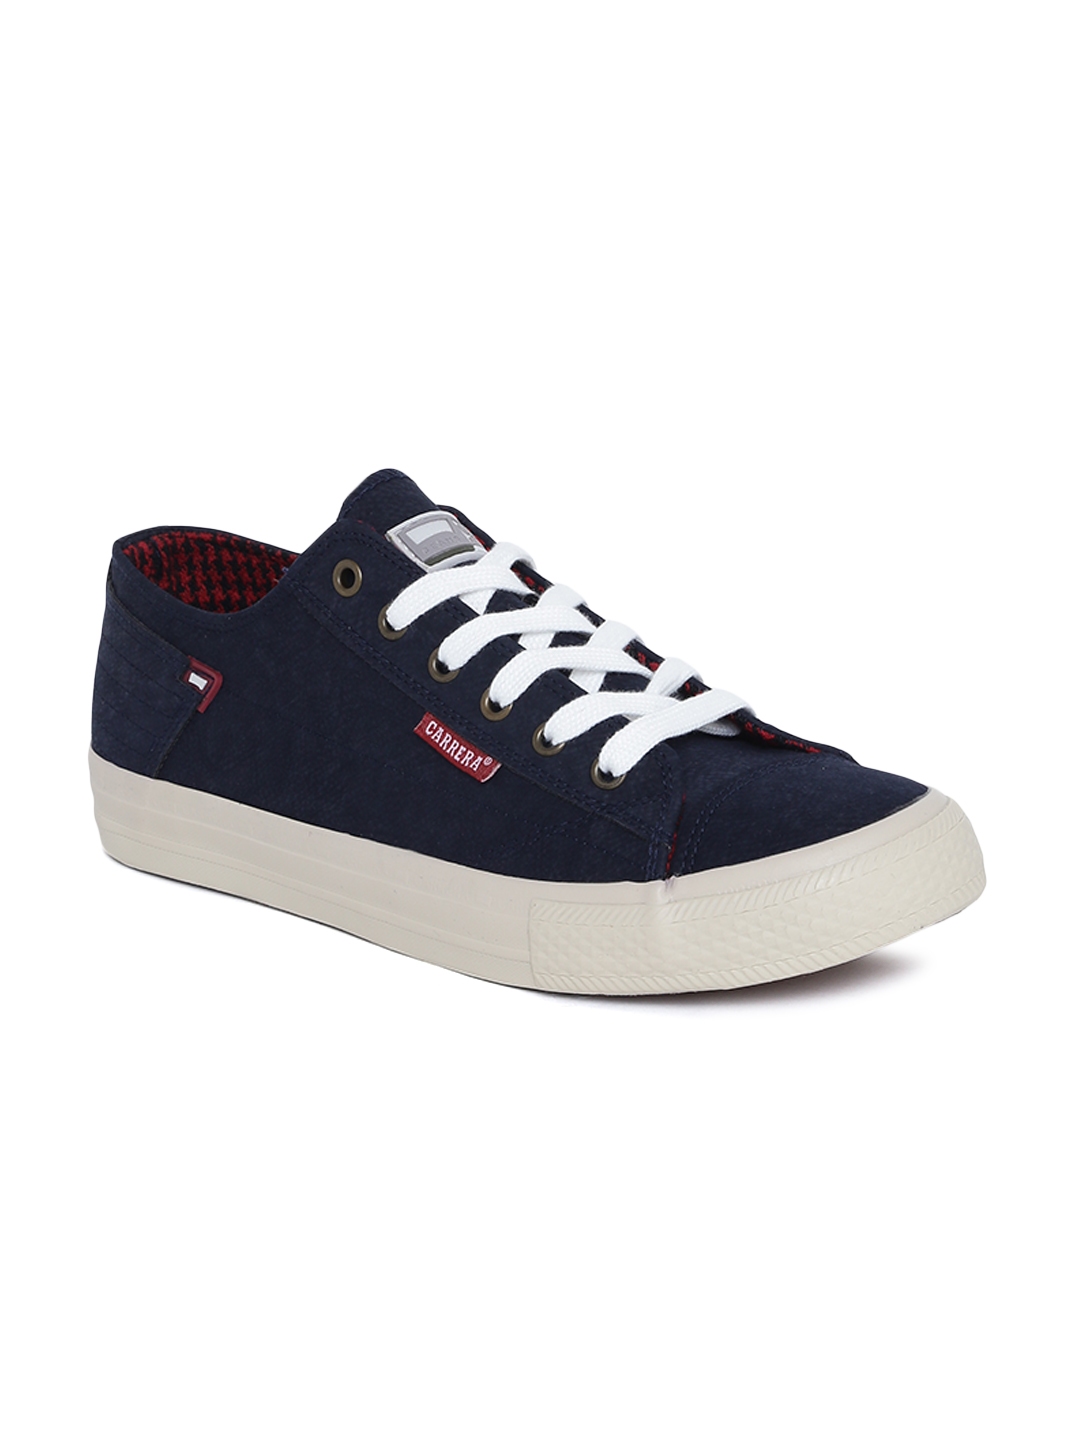 Buy Carrera Men Navy Blue Sneakers - Casual Shoes for Men 8084783 | Myntra